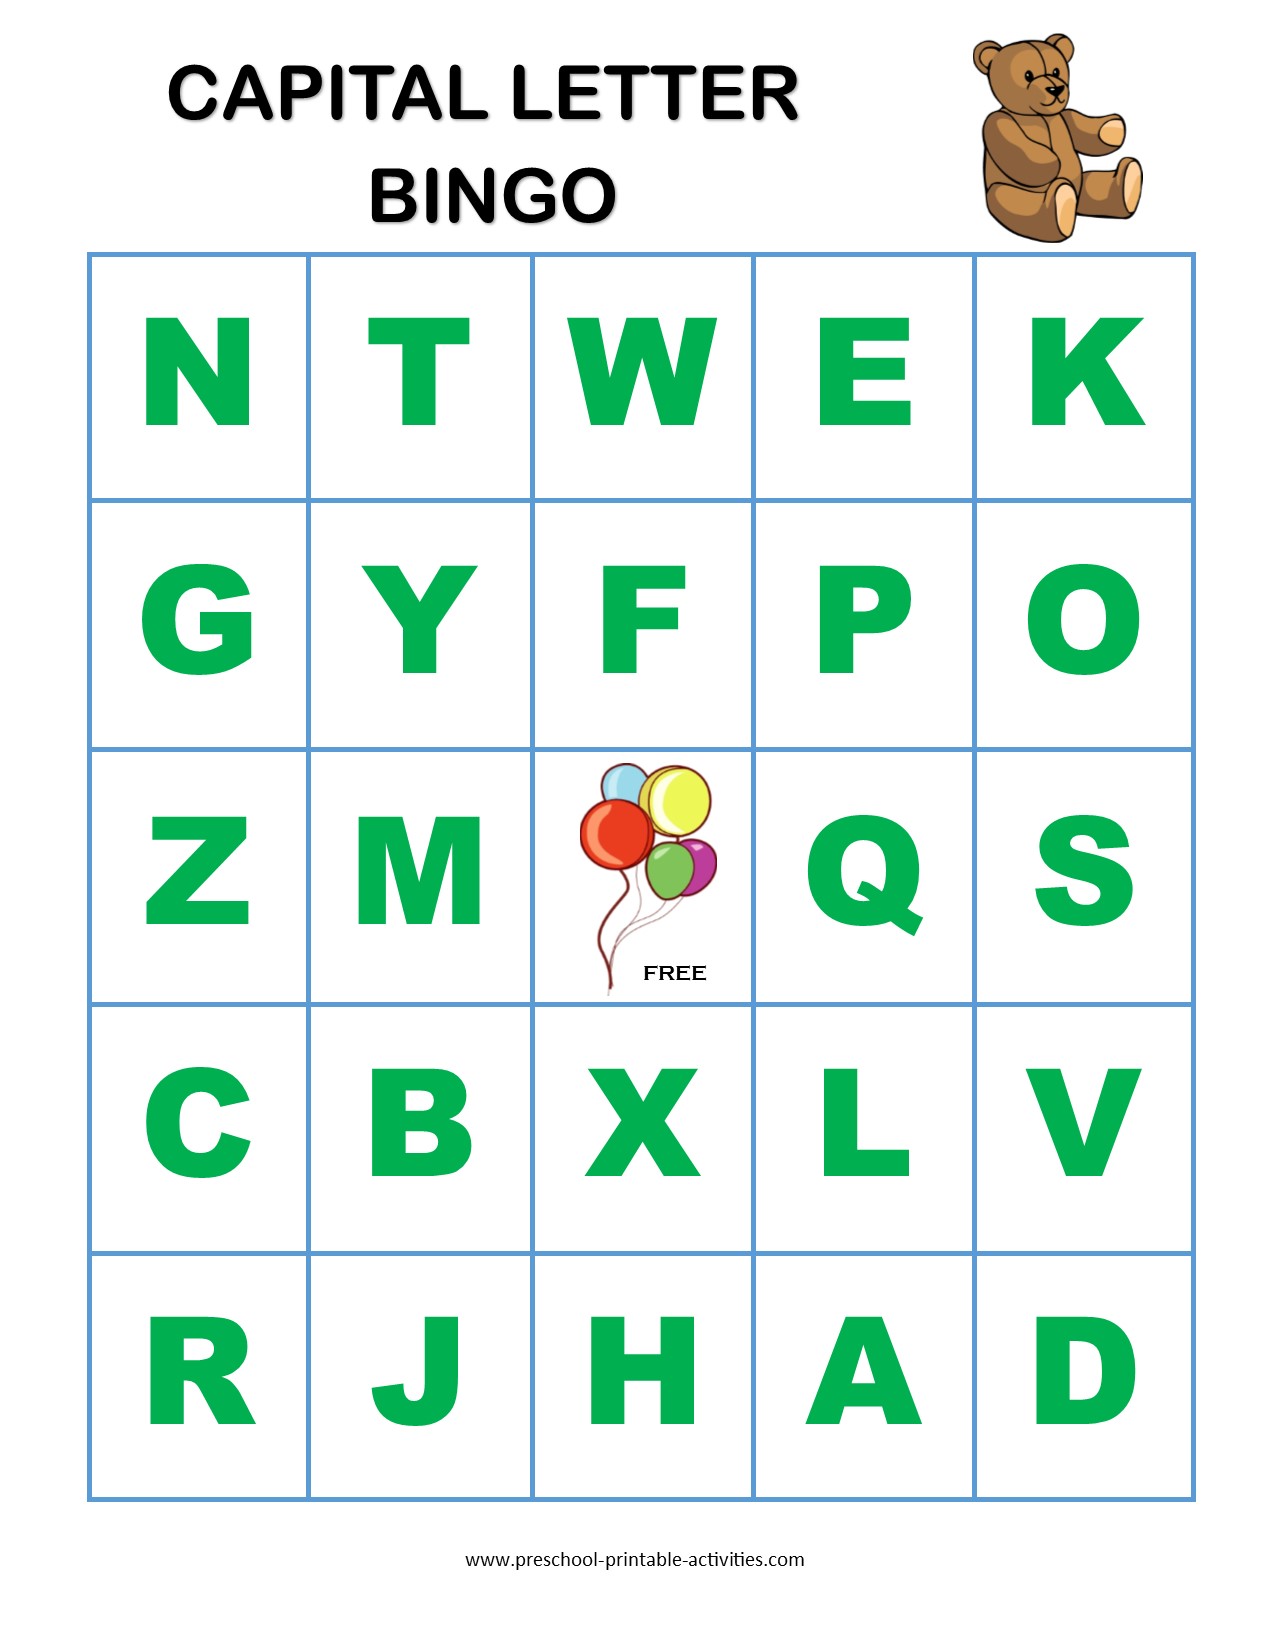 Capital letter bingo game board for preschoolers